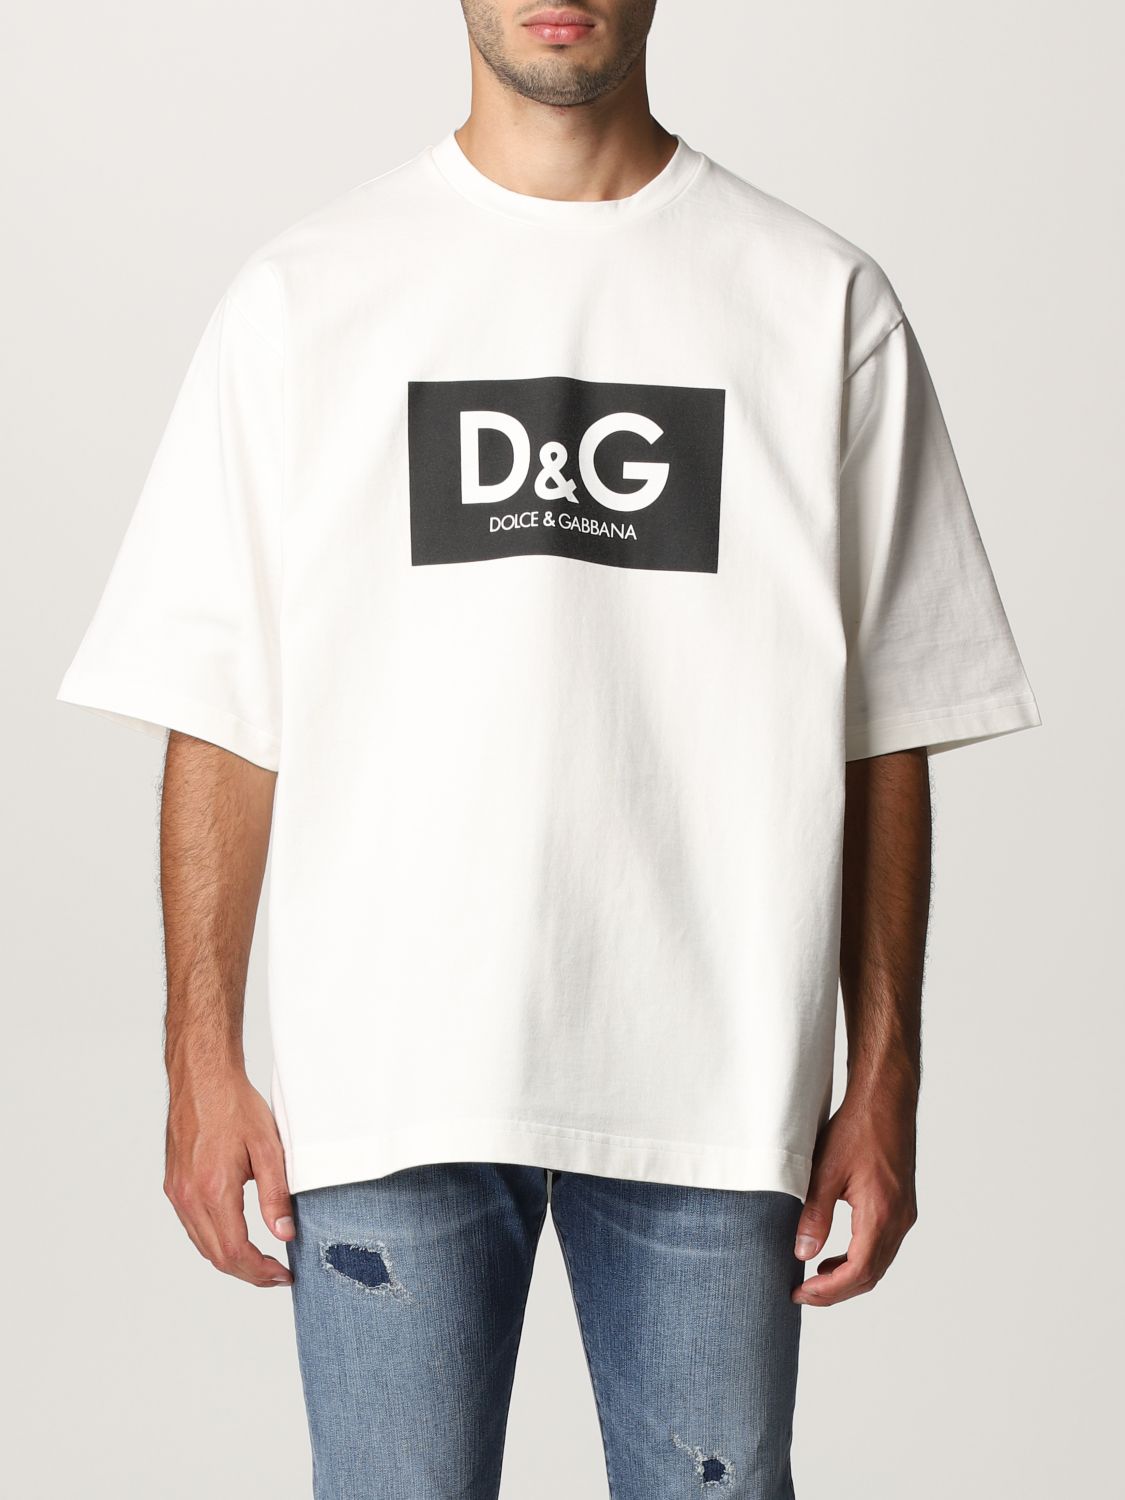 DOLCE & GABBANA: over T-shirt with D&G logo | T-Shirt Dolce & Gabbana ...